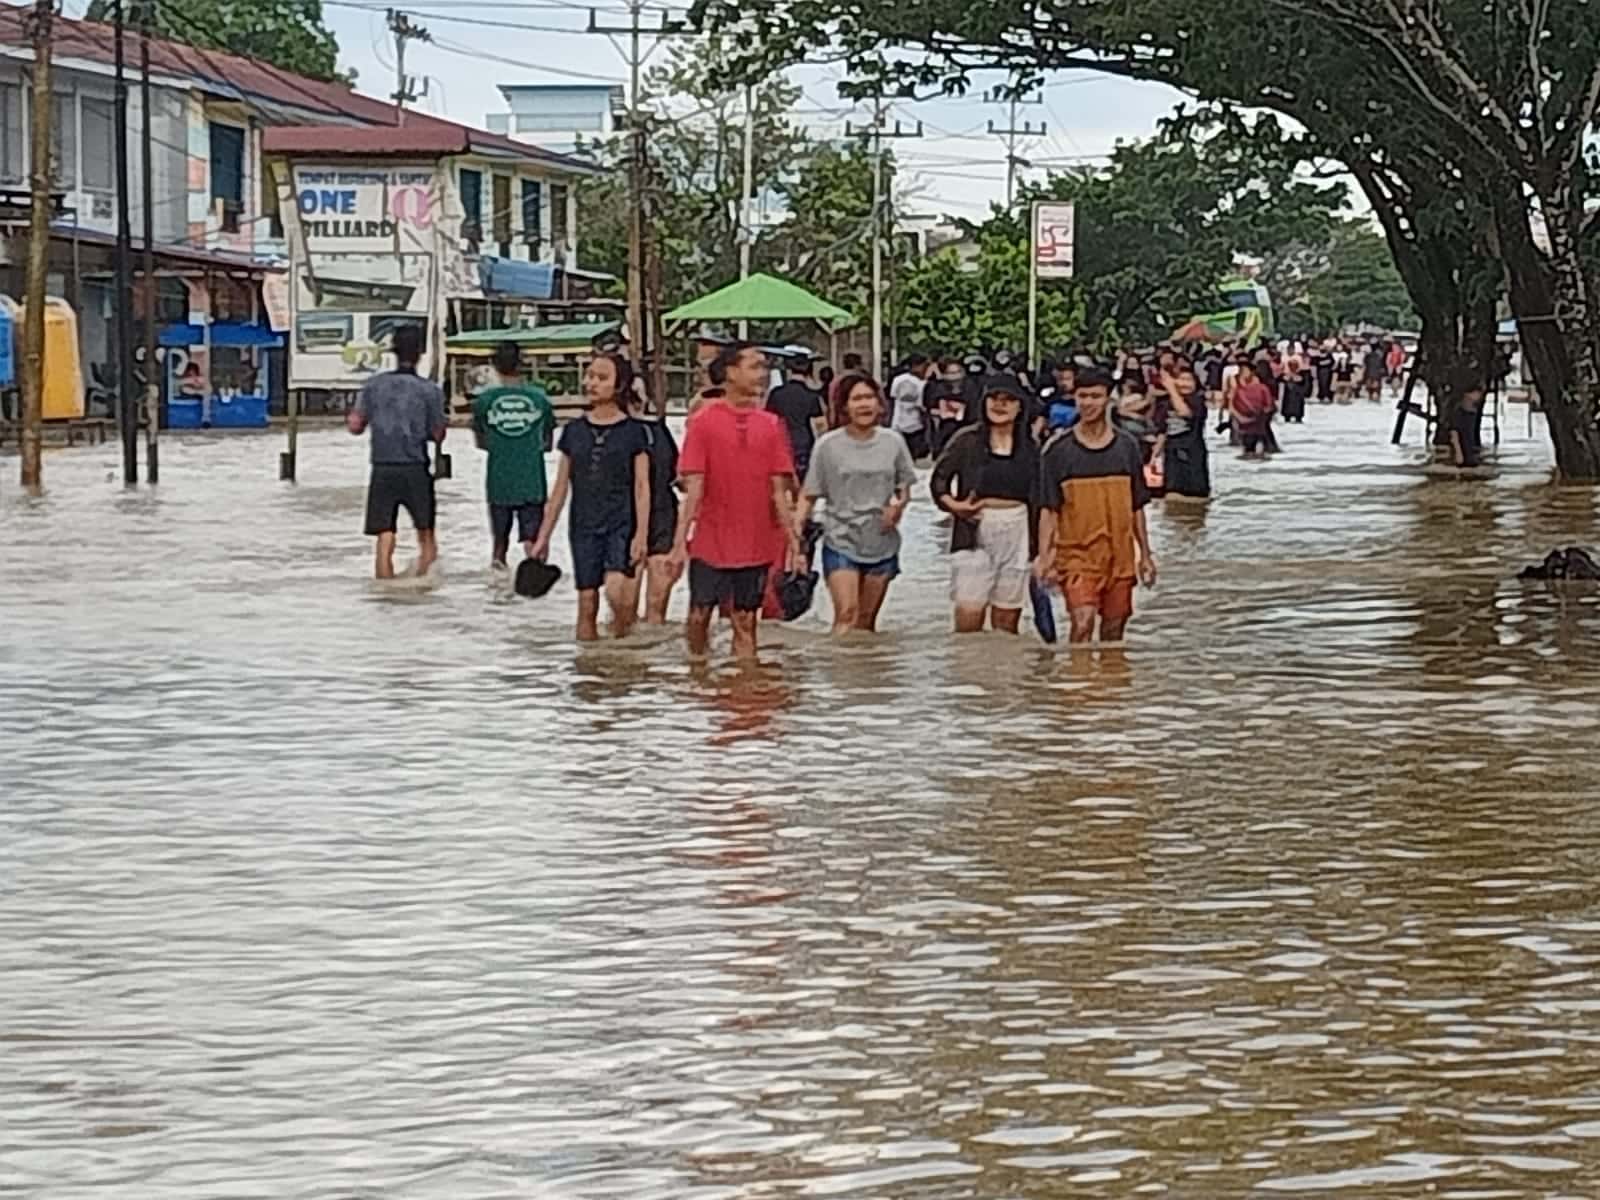 Ilustrasi banjir. (Foto: Istimewa)